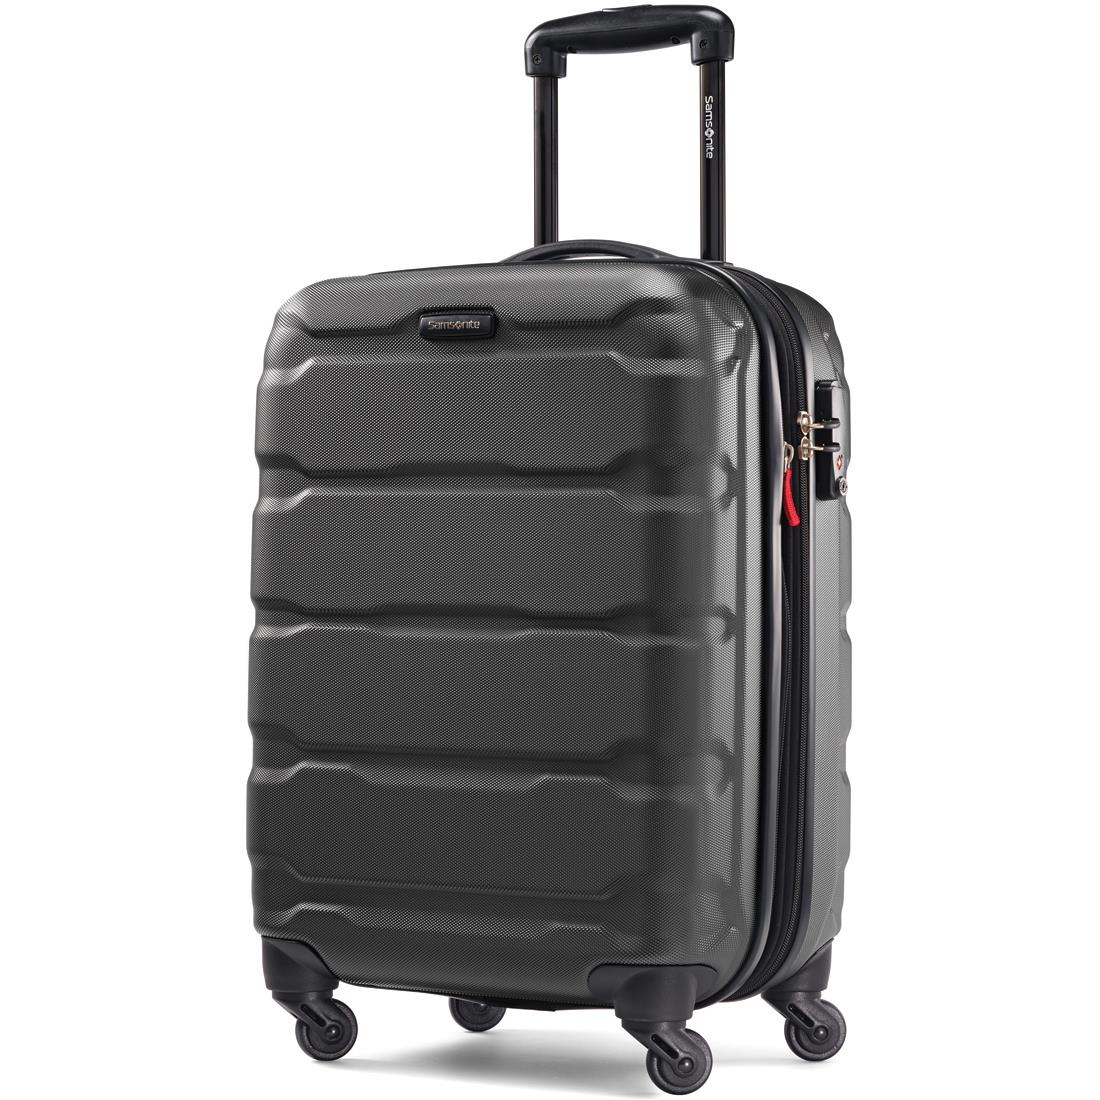 Samsonite Omni 20 Inch Hardside Spinner Luggage Suitcase Black (68308-1041)